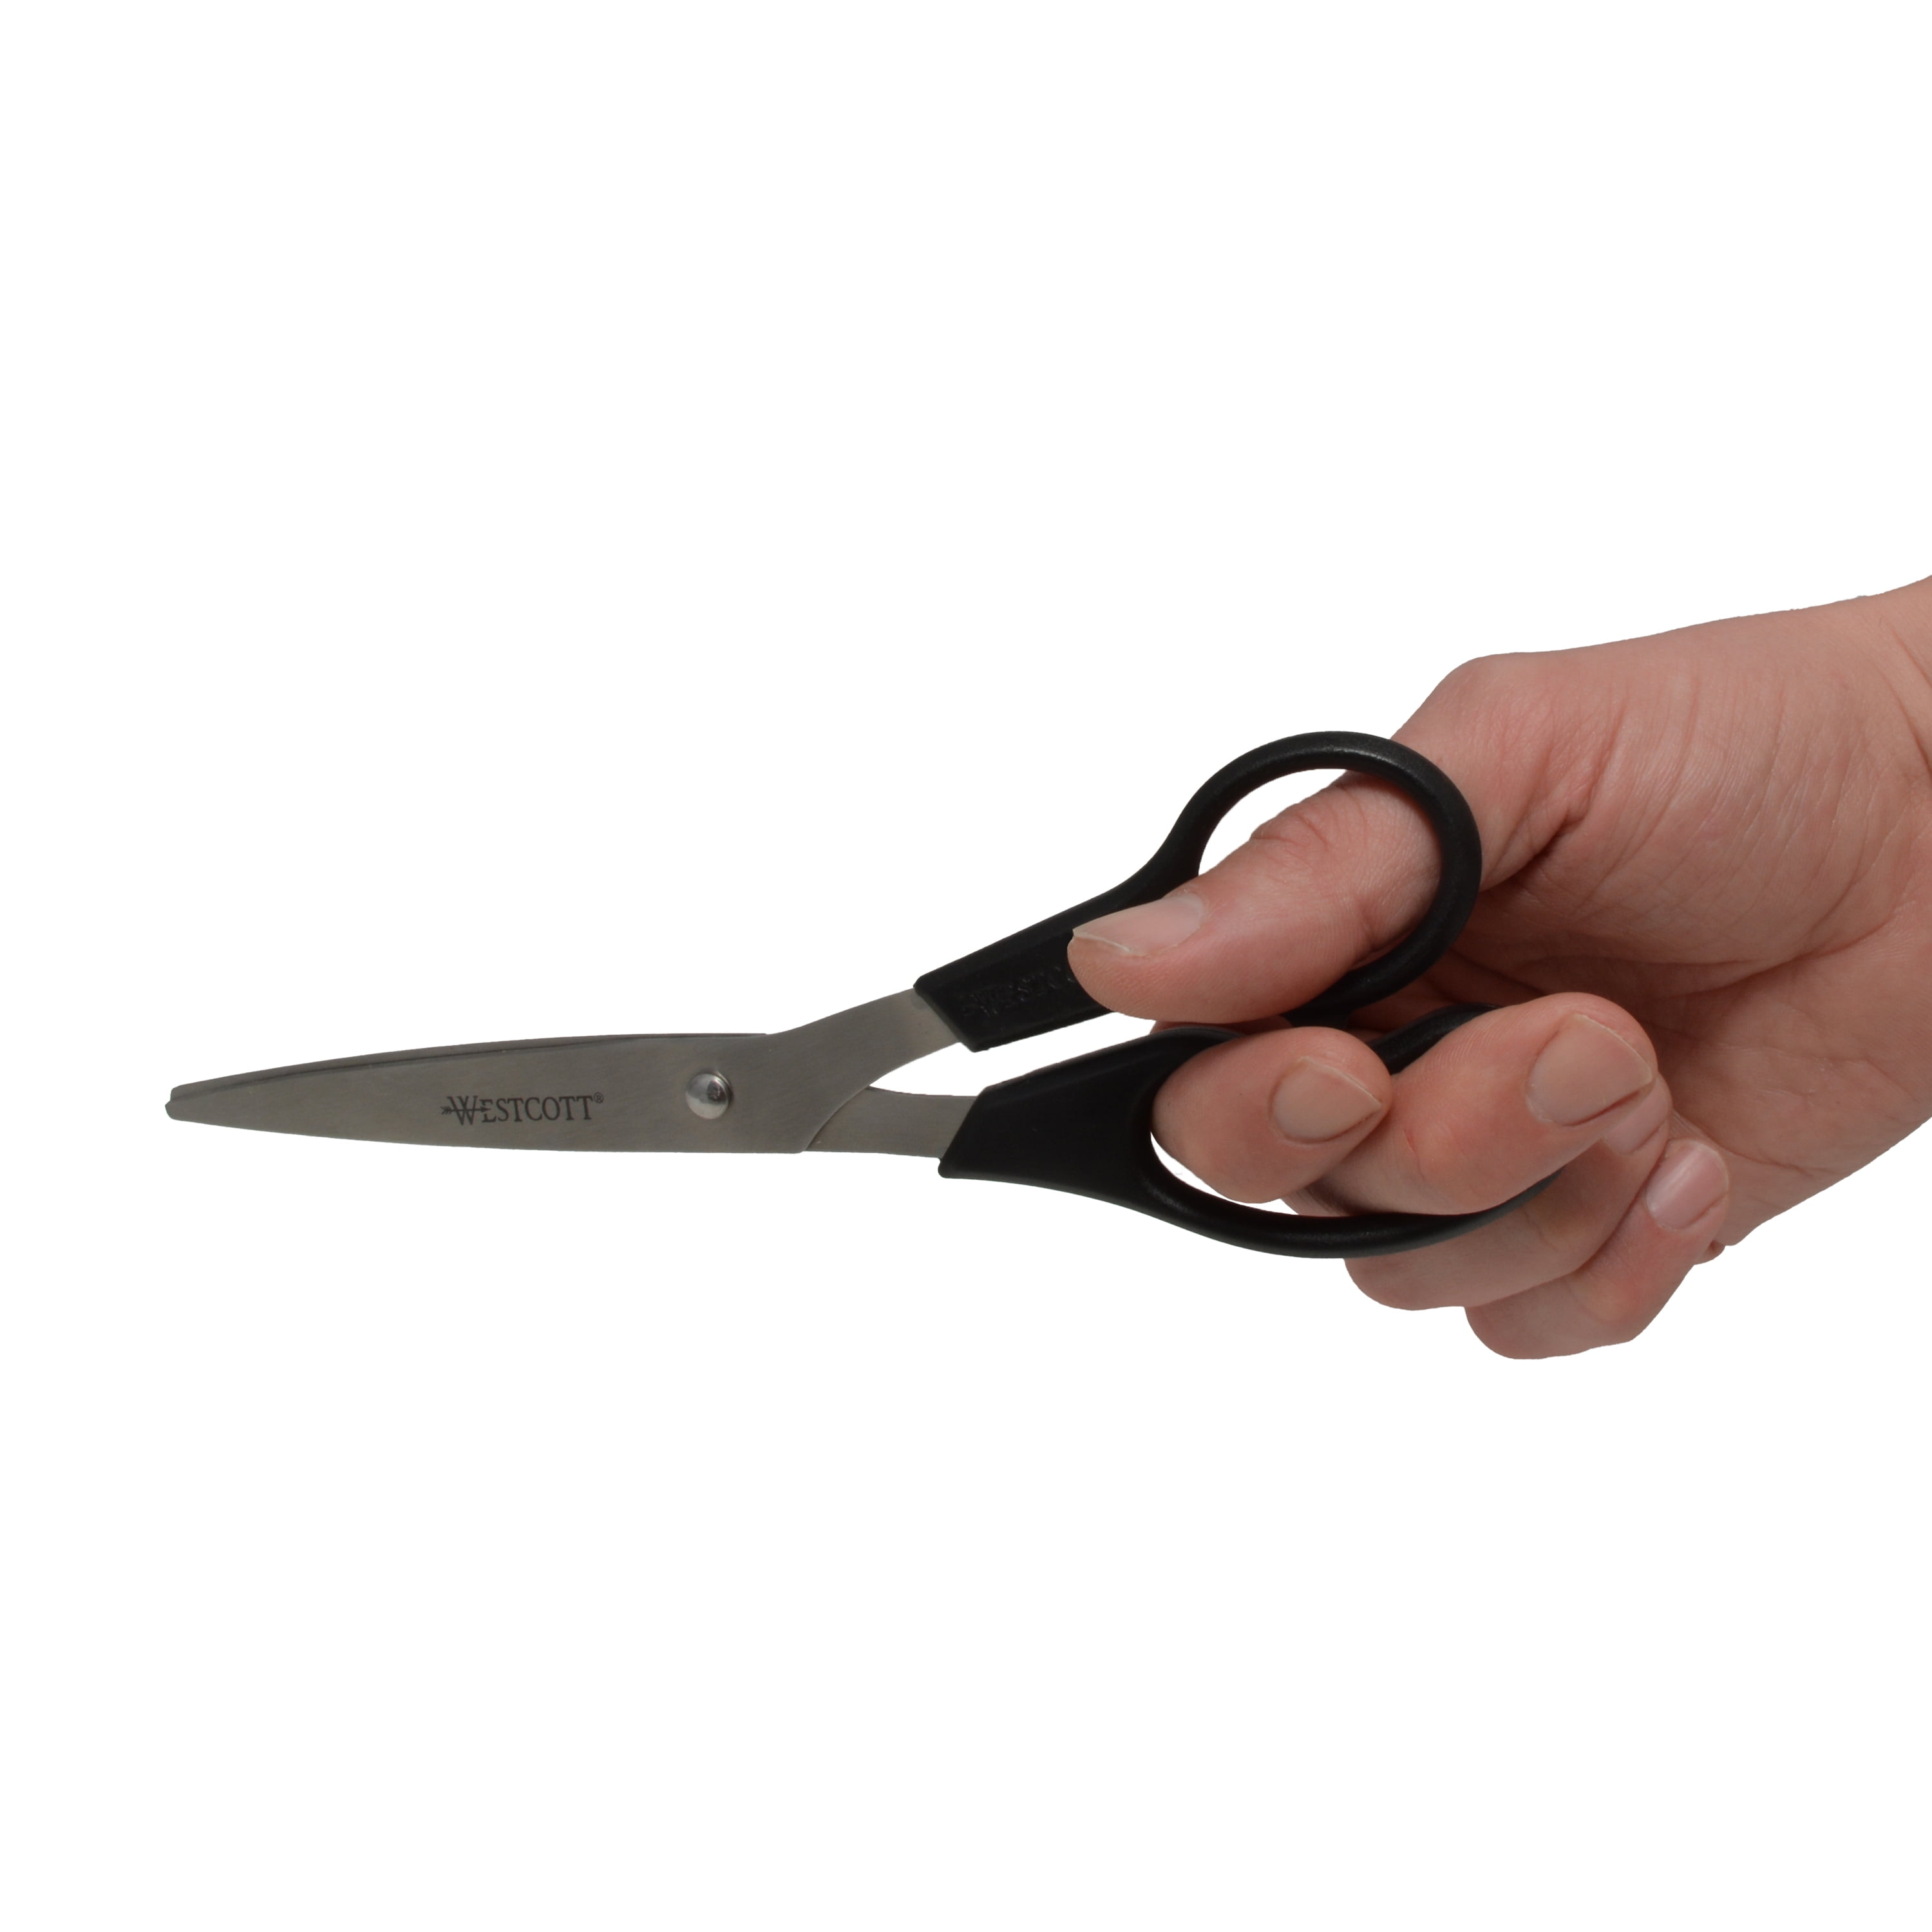 Scissors - All Purpose Scissors 8 Holiday Pattern – Merrily We